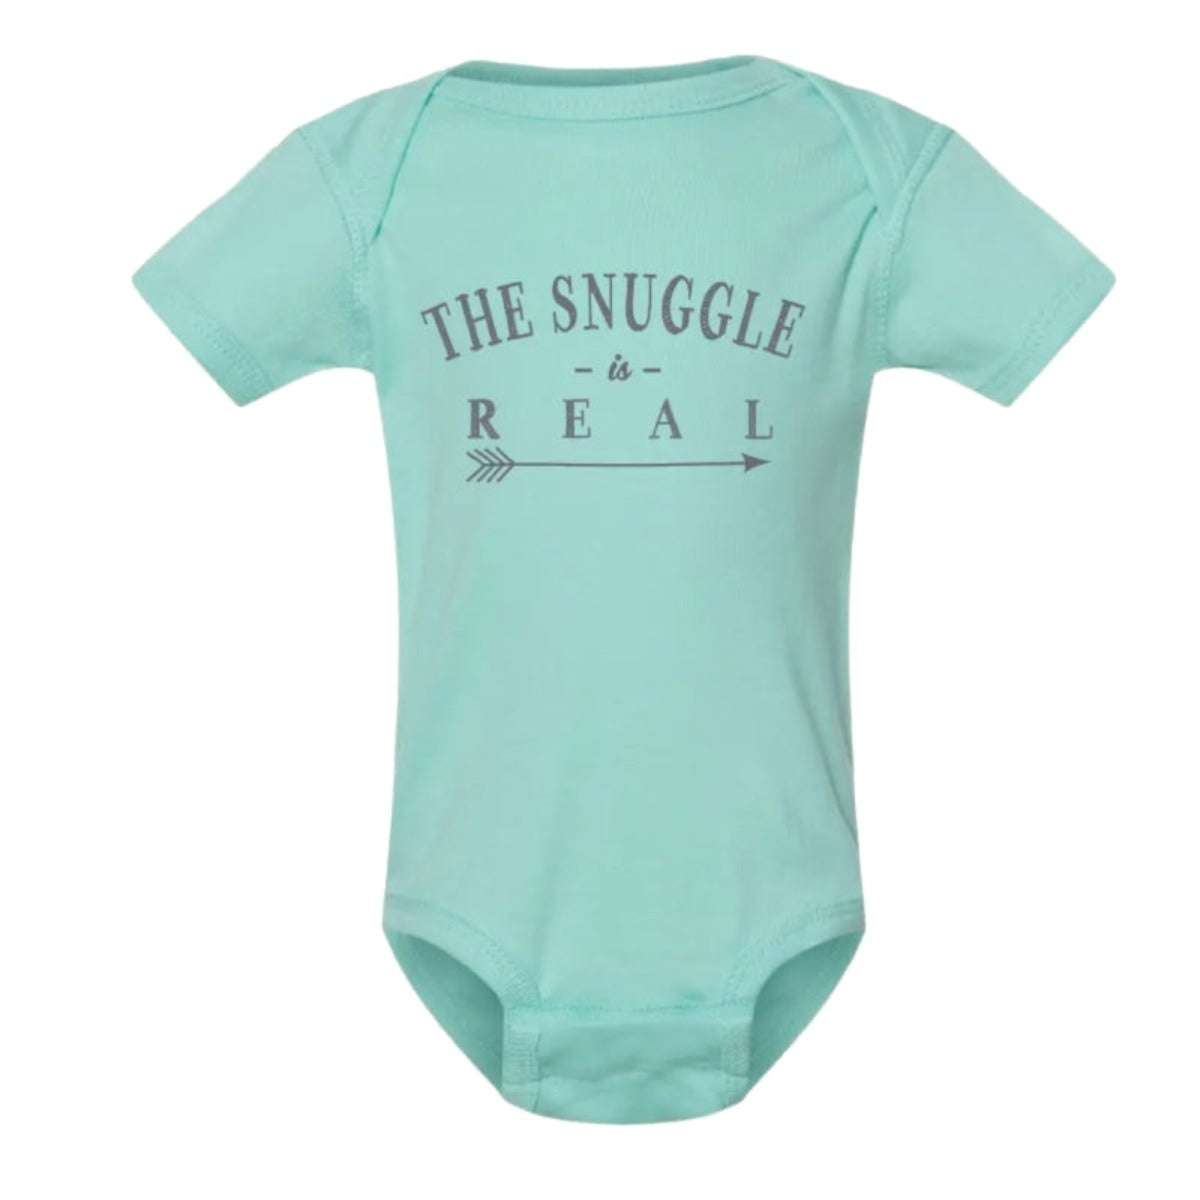 Soft-baby-onesies -The snuggle is real baby onesie